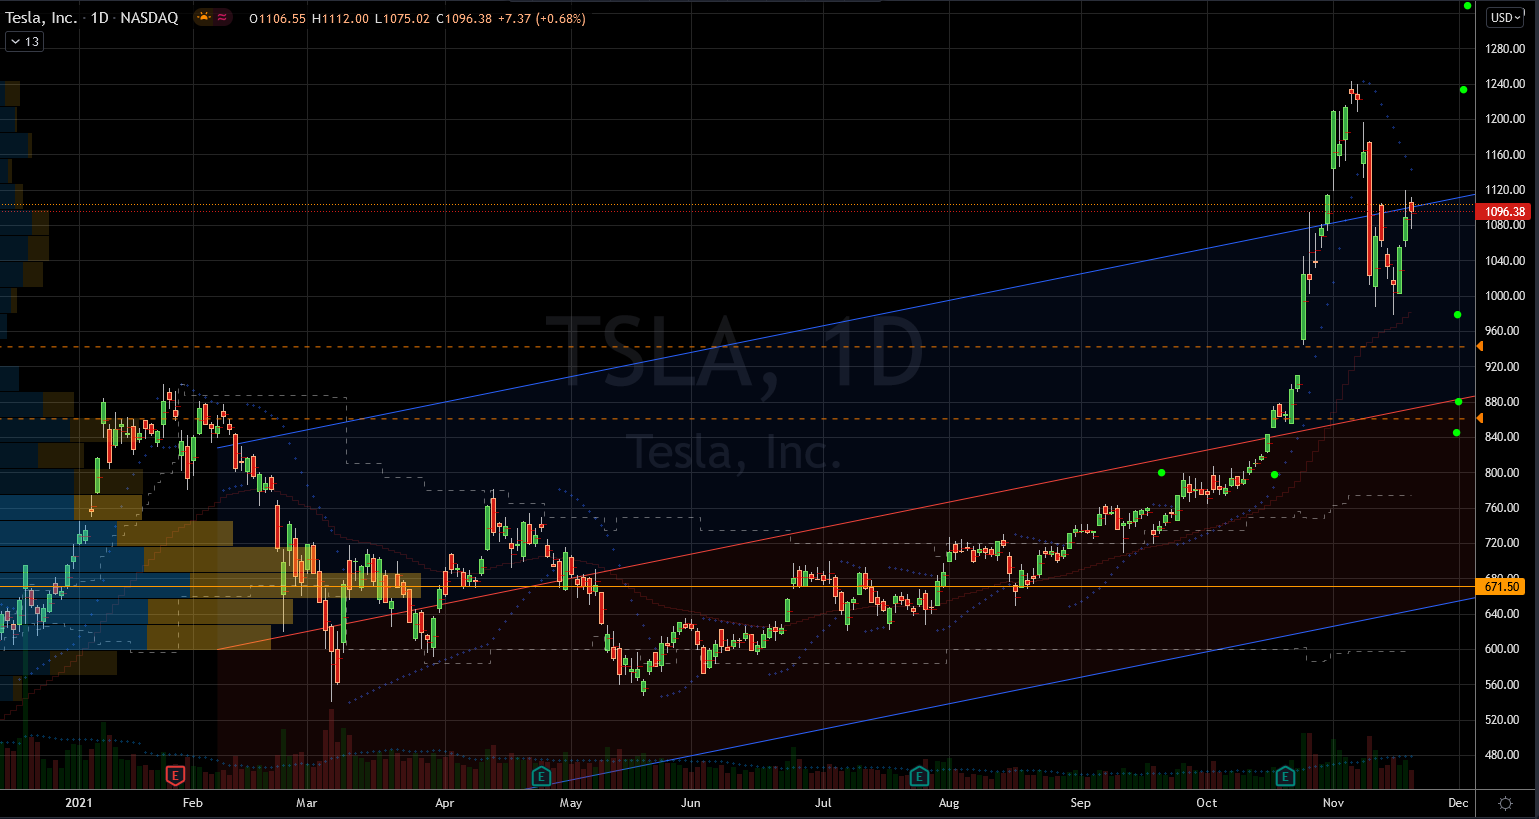 Tesla (TSLA) Stock Showing Pivotal Levels